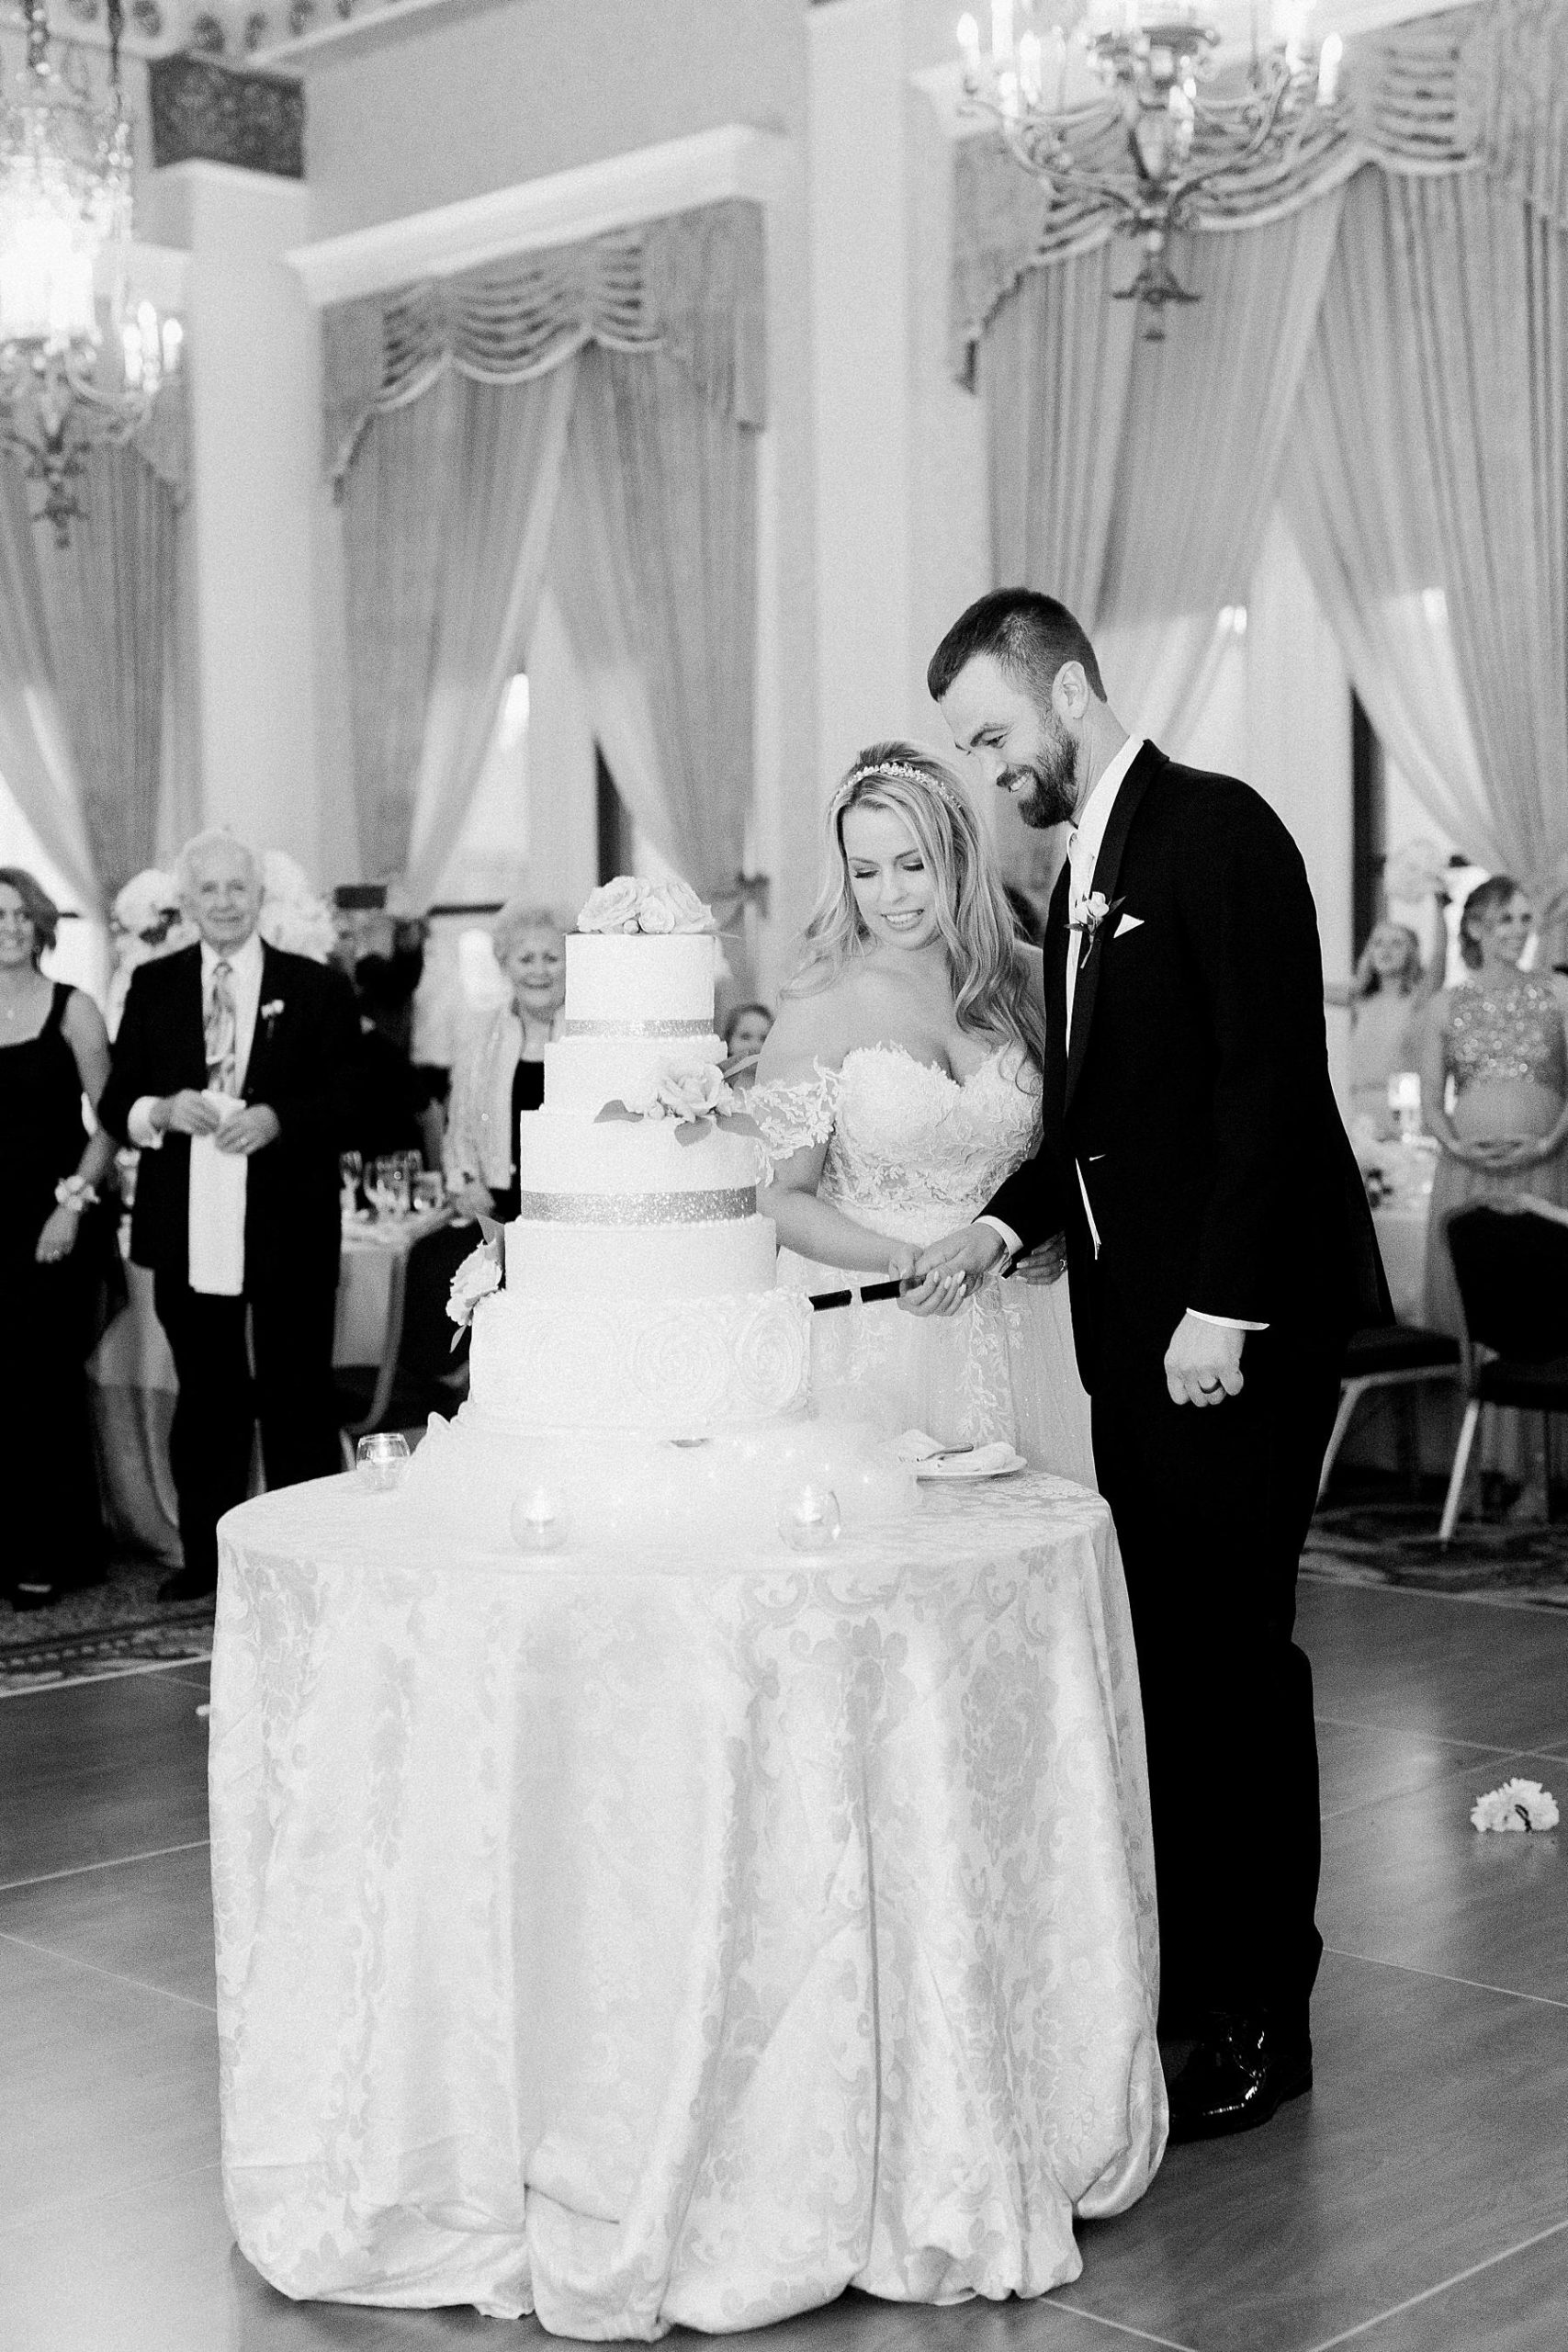 couple cutting cake at classic pfister hotel white and gold elegant milwaukee wedding reception